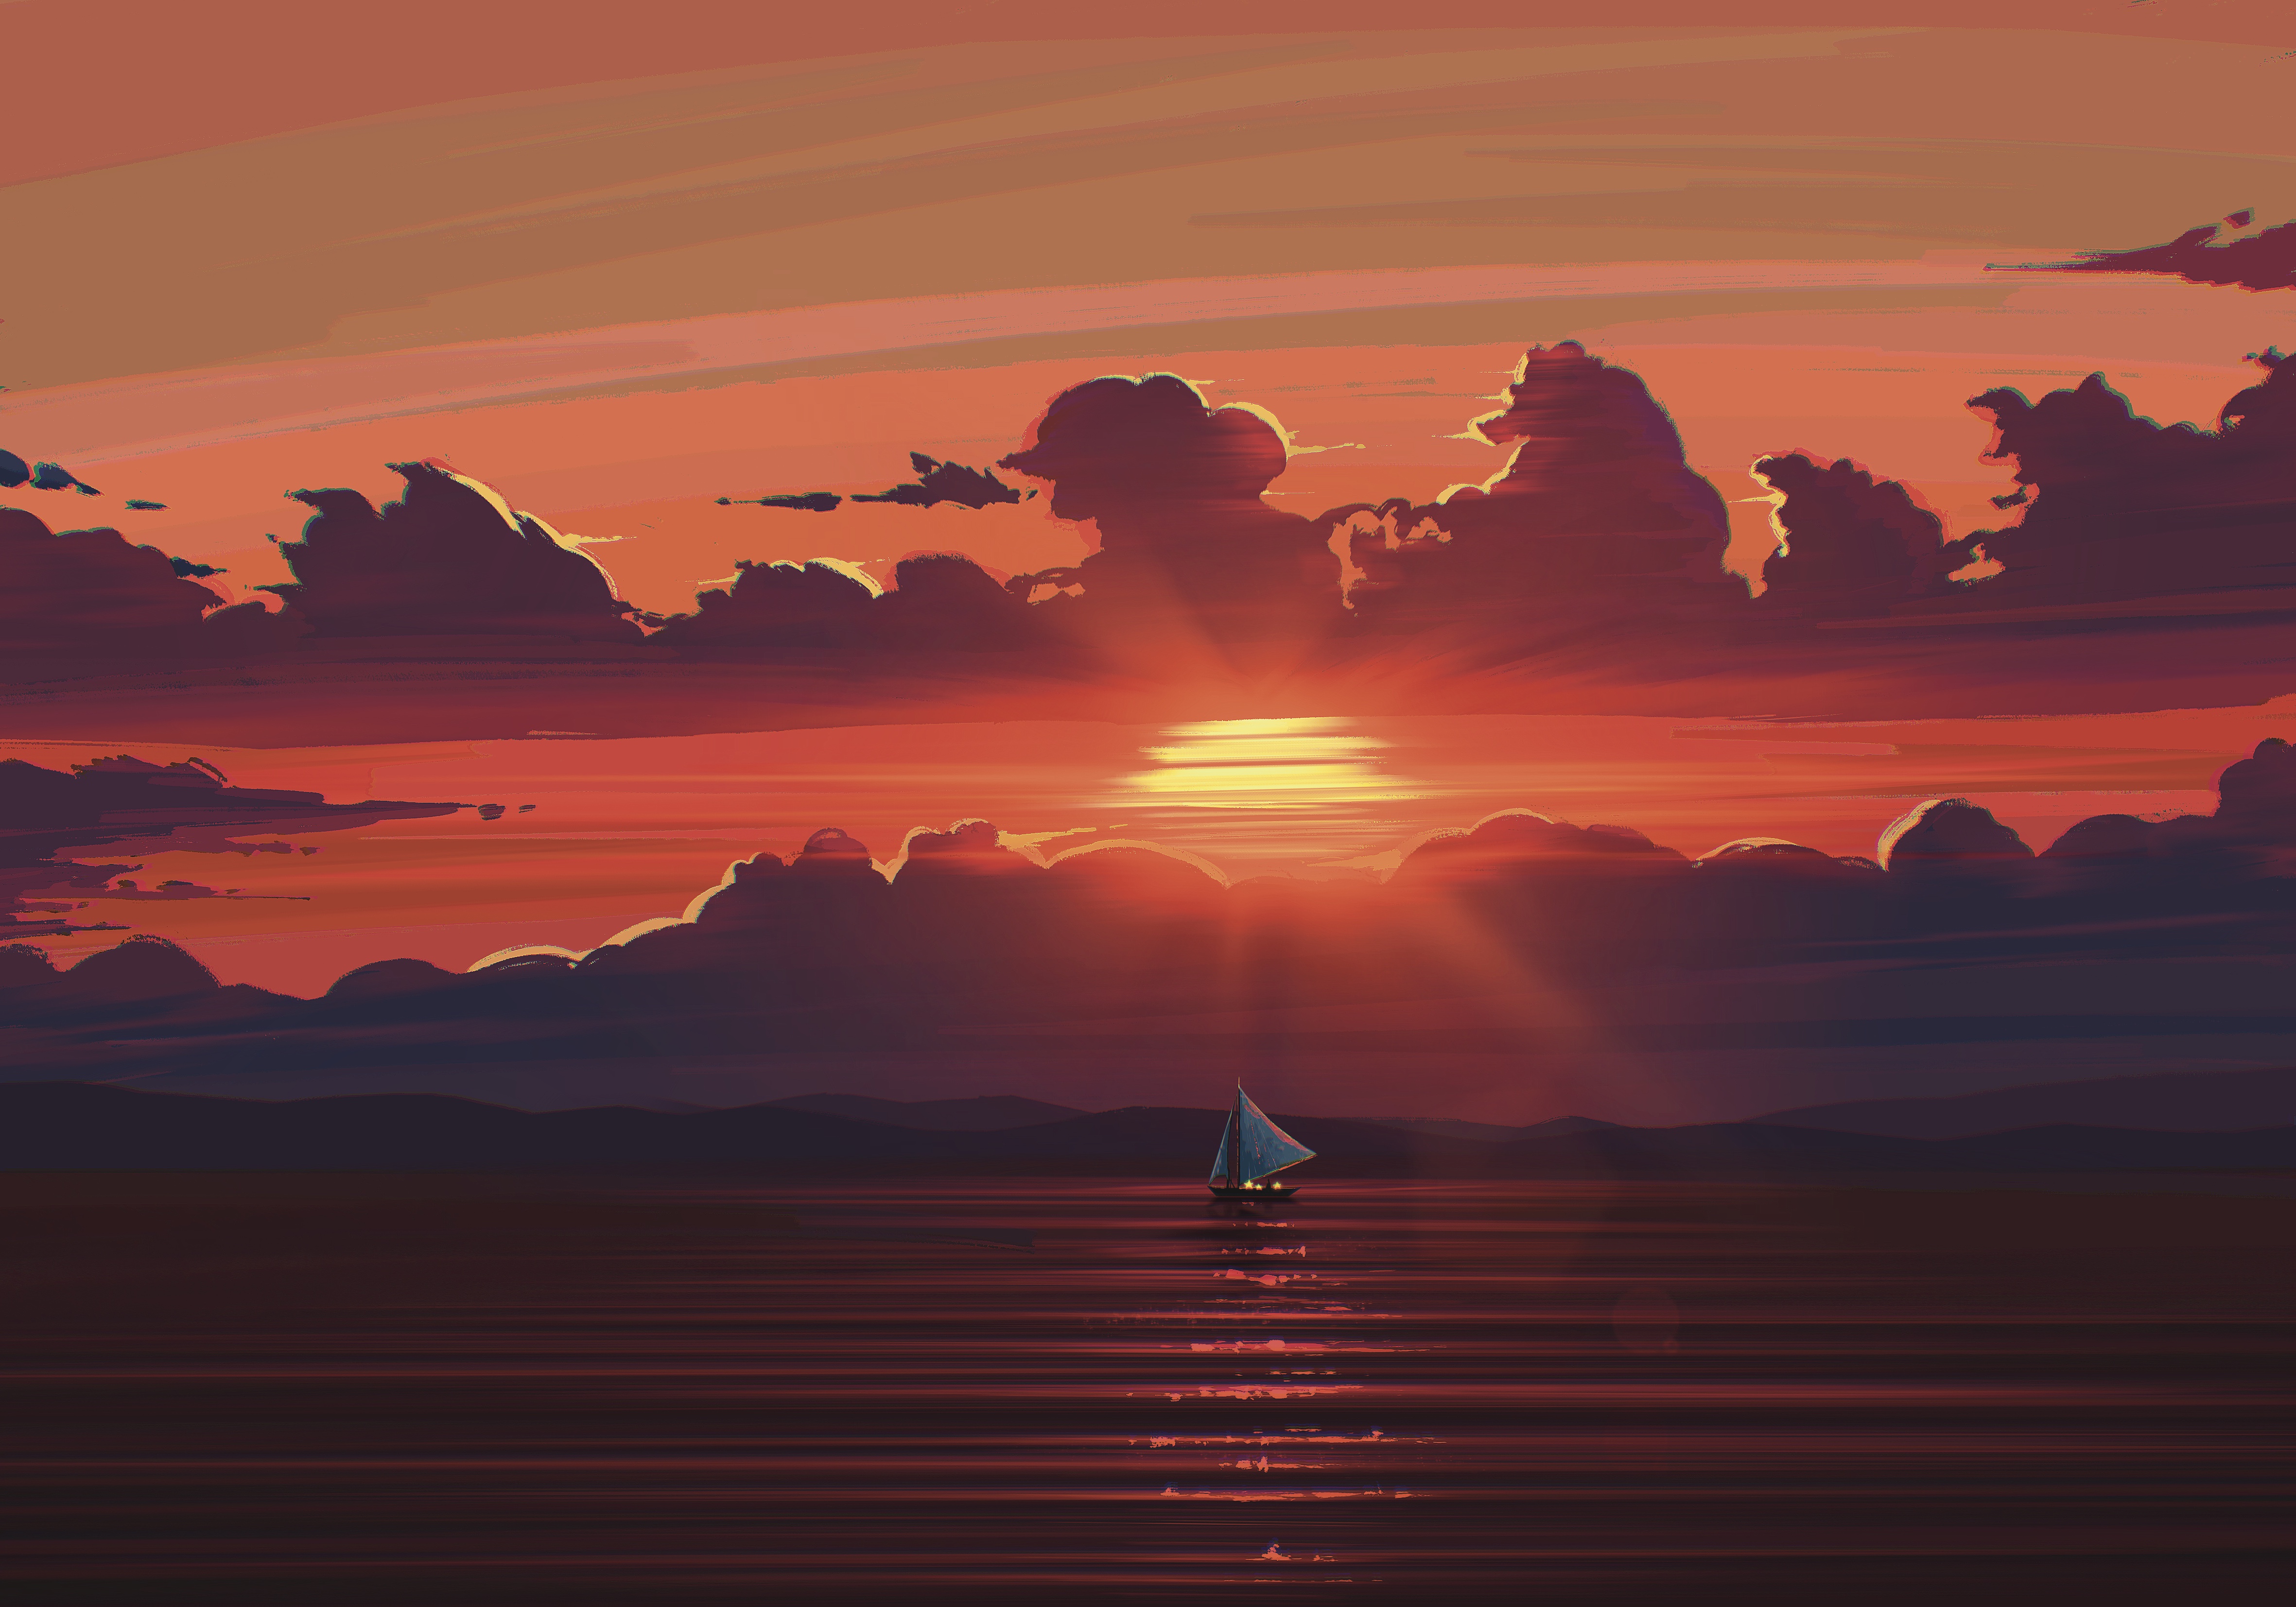 General 4724x3307 digital art artwork illustration painting landscape sunset sea water clouds Sun boat sailing ship mountains sky sunlight sailboats